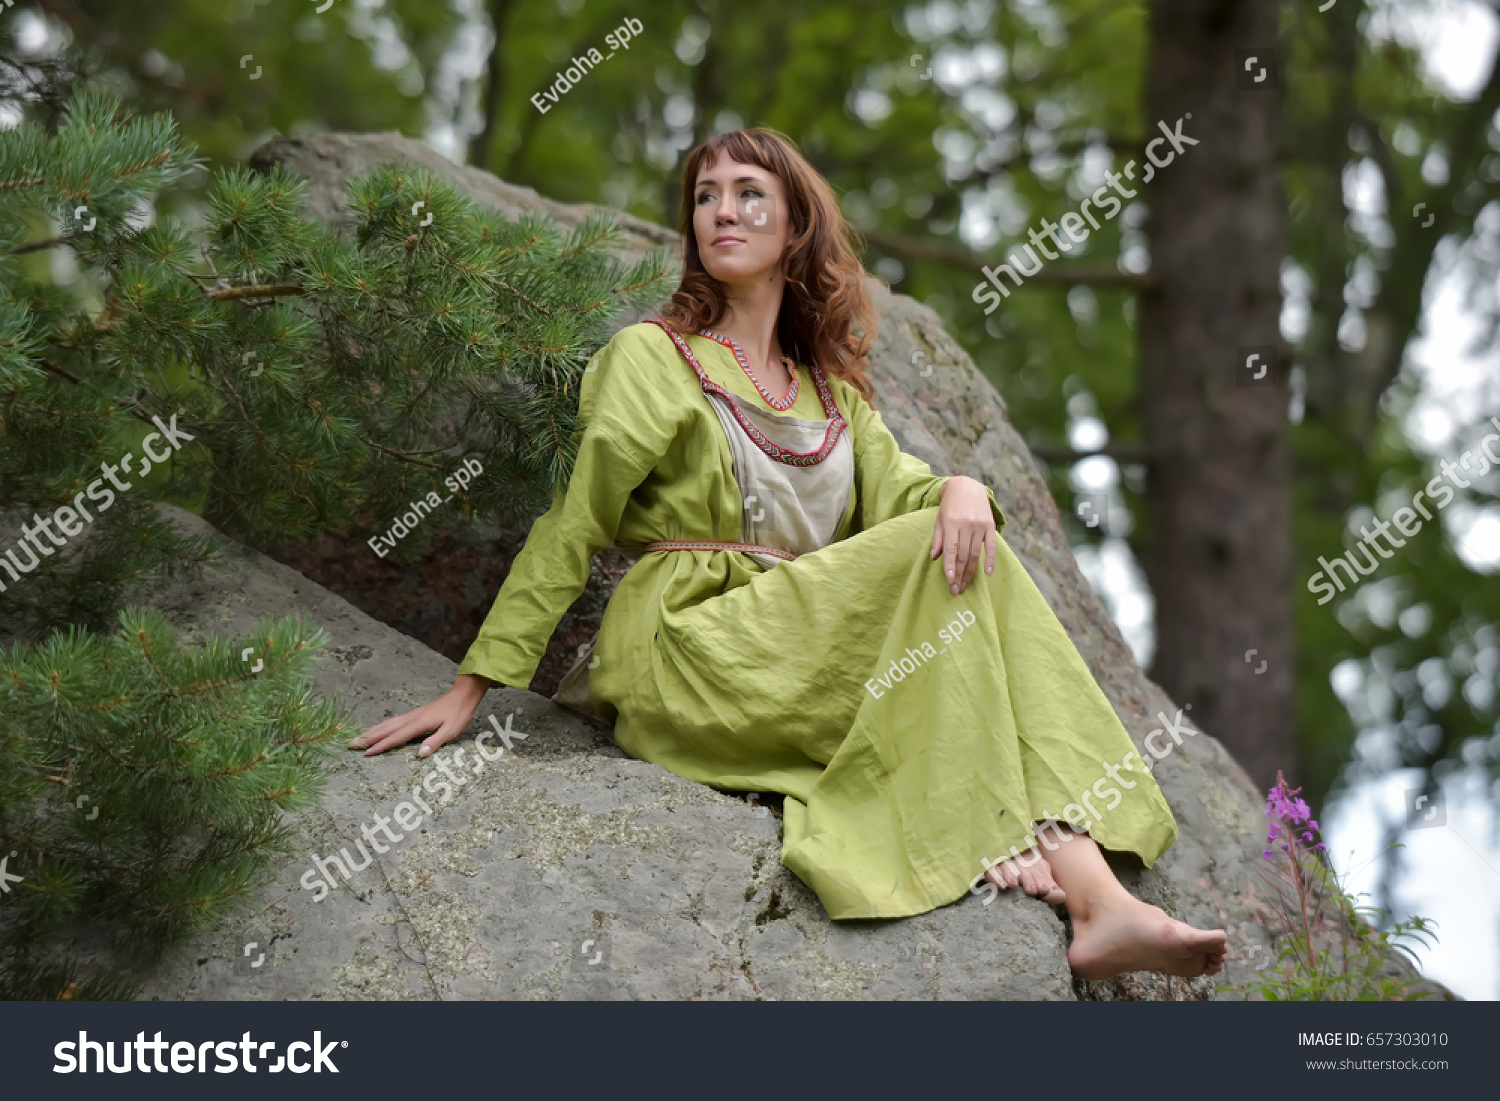 https://image.shutterstock.com/shutterstock/photos/657303010/display_1500/stock-photo-viking-girl-in-a-retro-dress-657303010.jpg